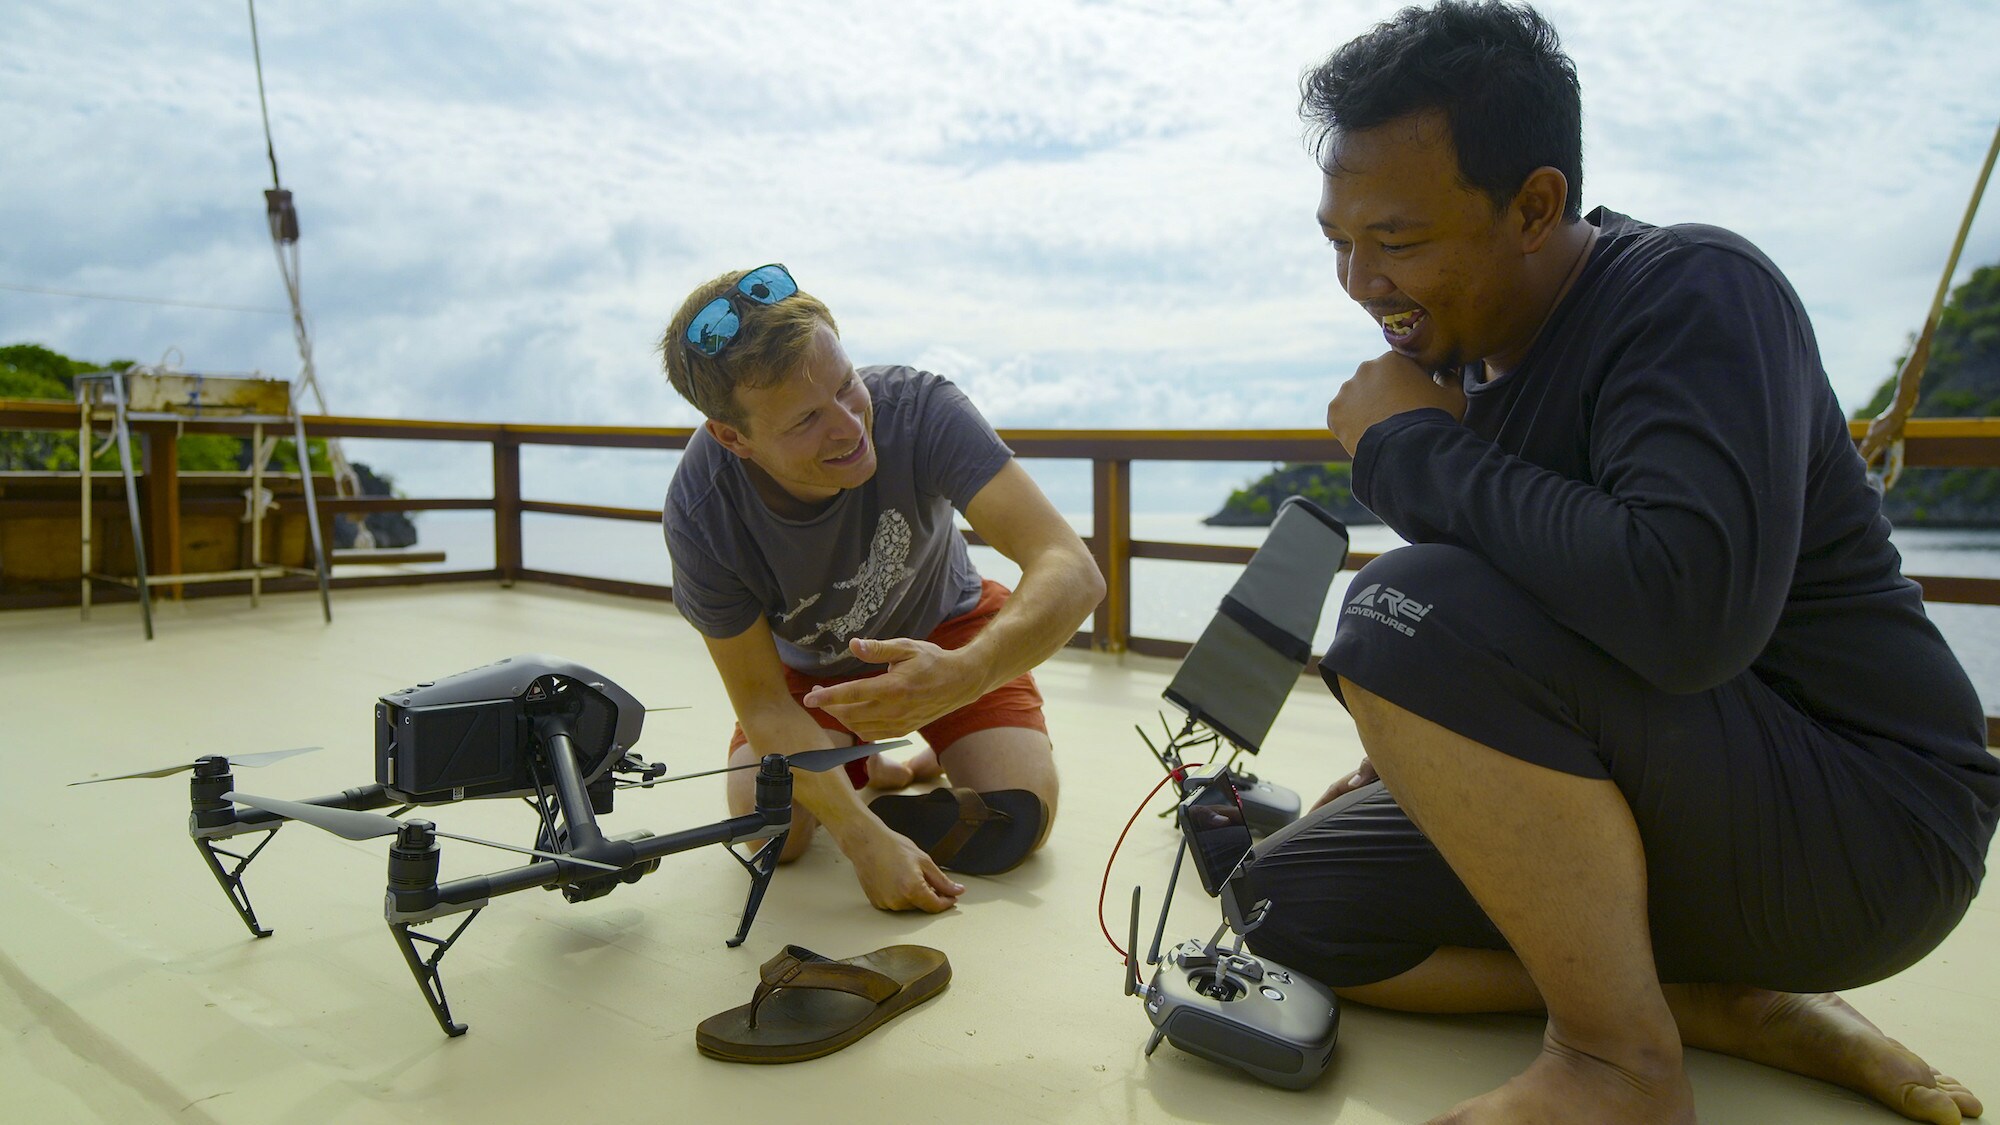 Bertie Gregory and Ferdy Anggriya Suwartana talk through drone instructions. (National Geographic for Disney+/Spencer Millsap)